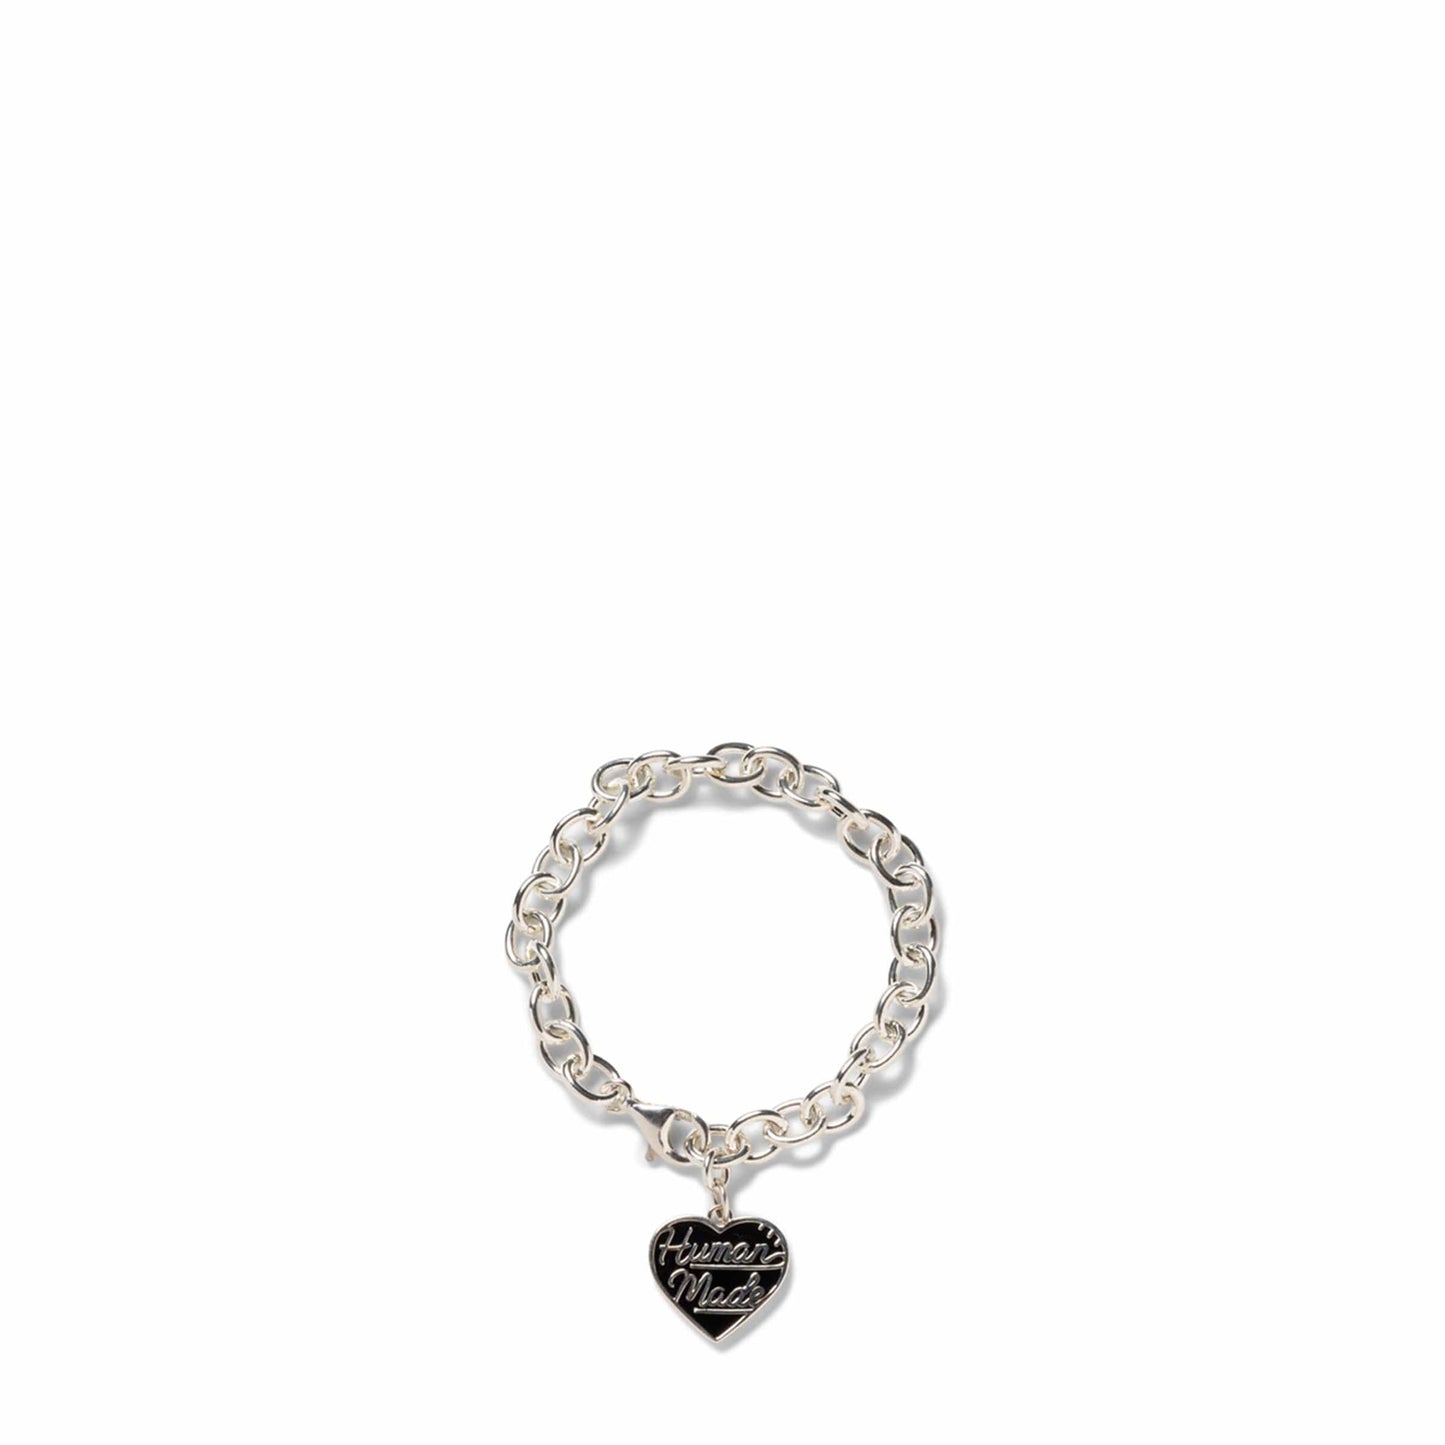 Human Made Jewelry BLACK / O/S HEART SILVER BRACELET